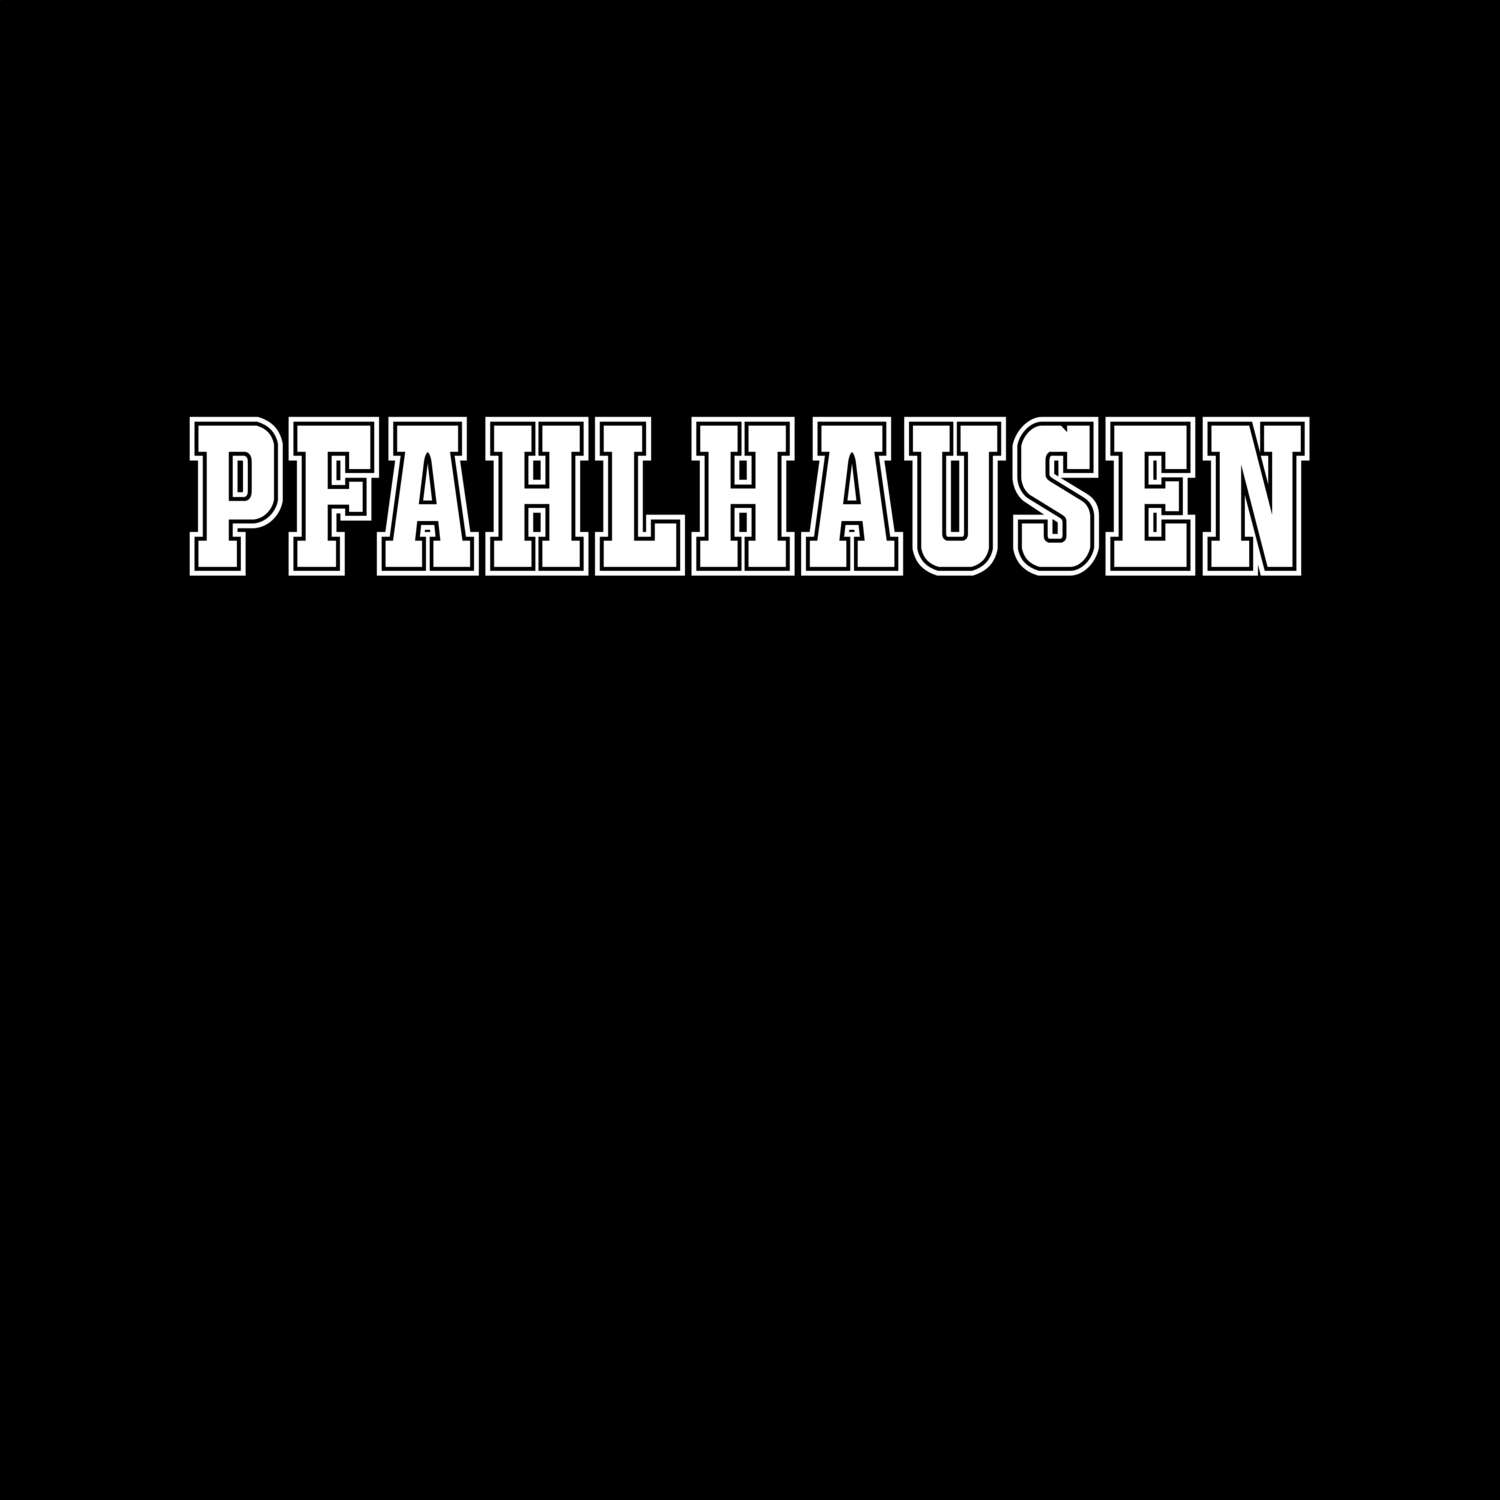 Pfahlhausen T-Shirt »Classic«